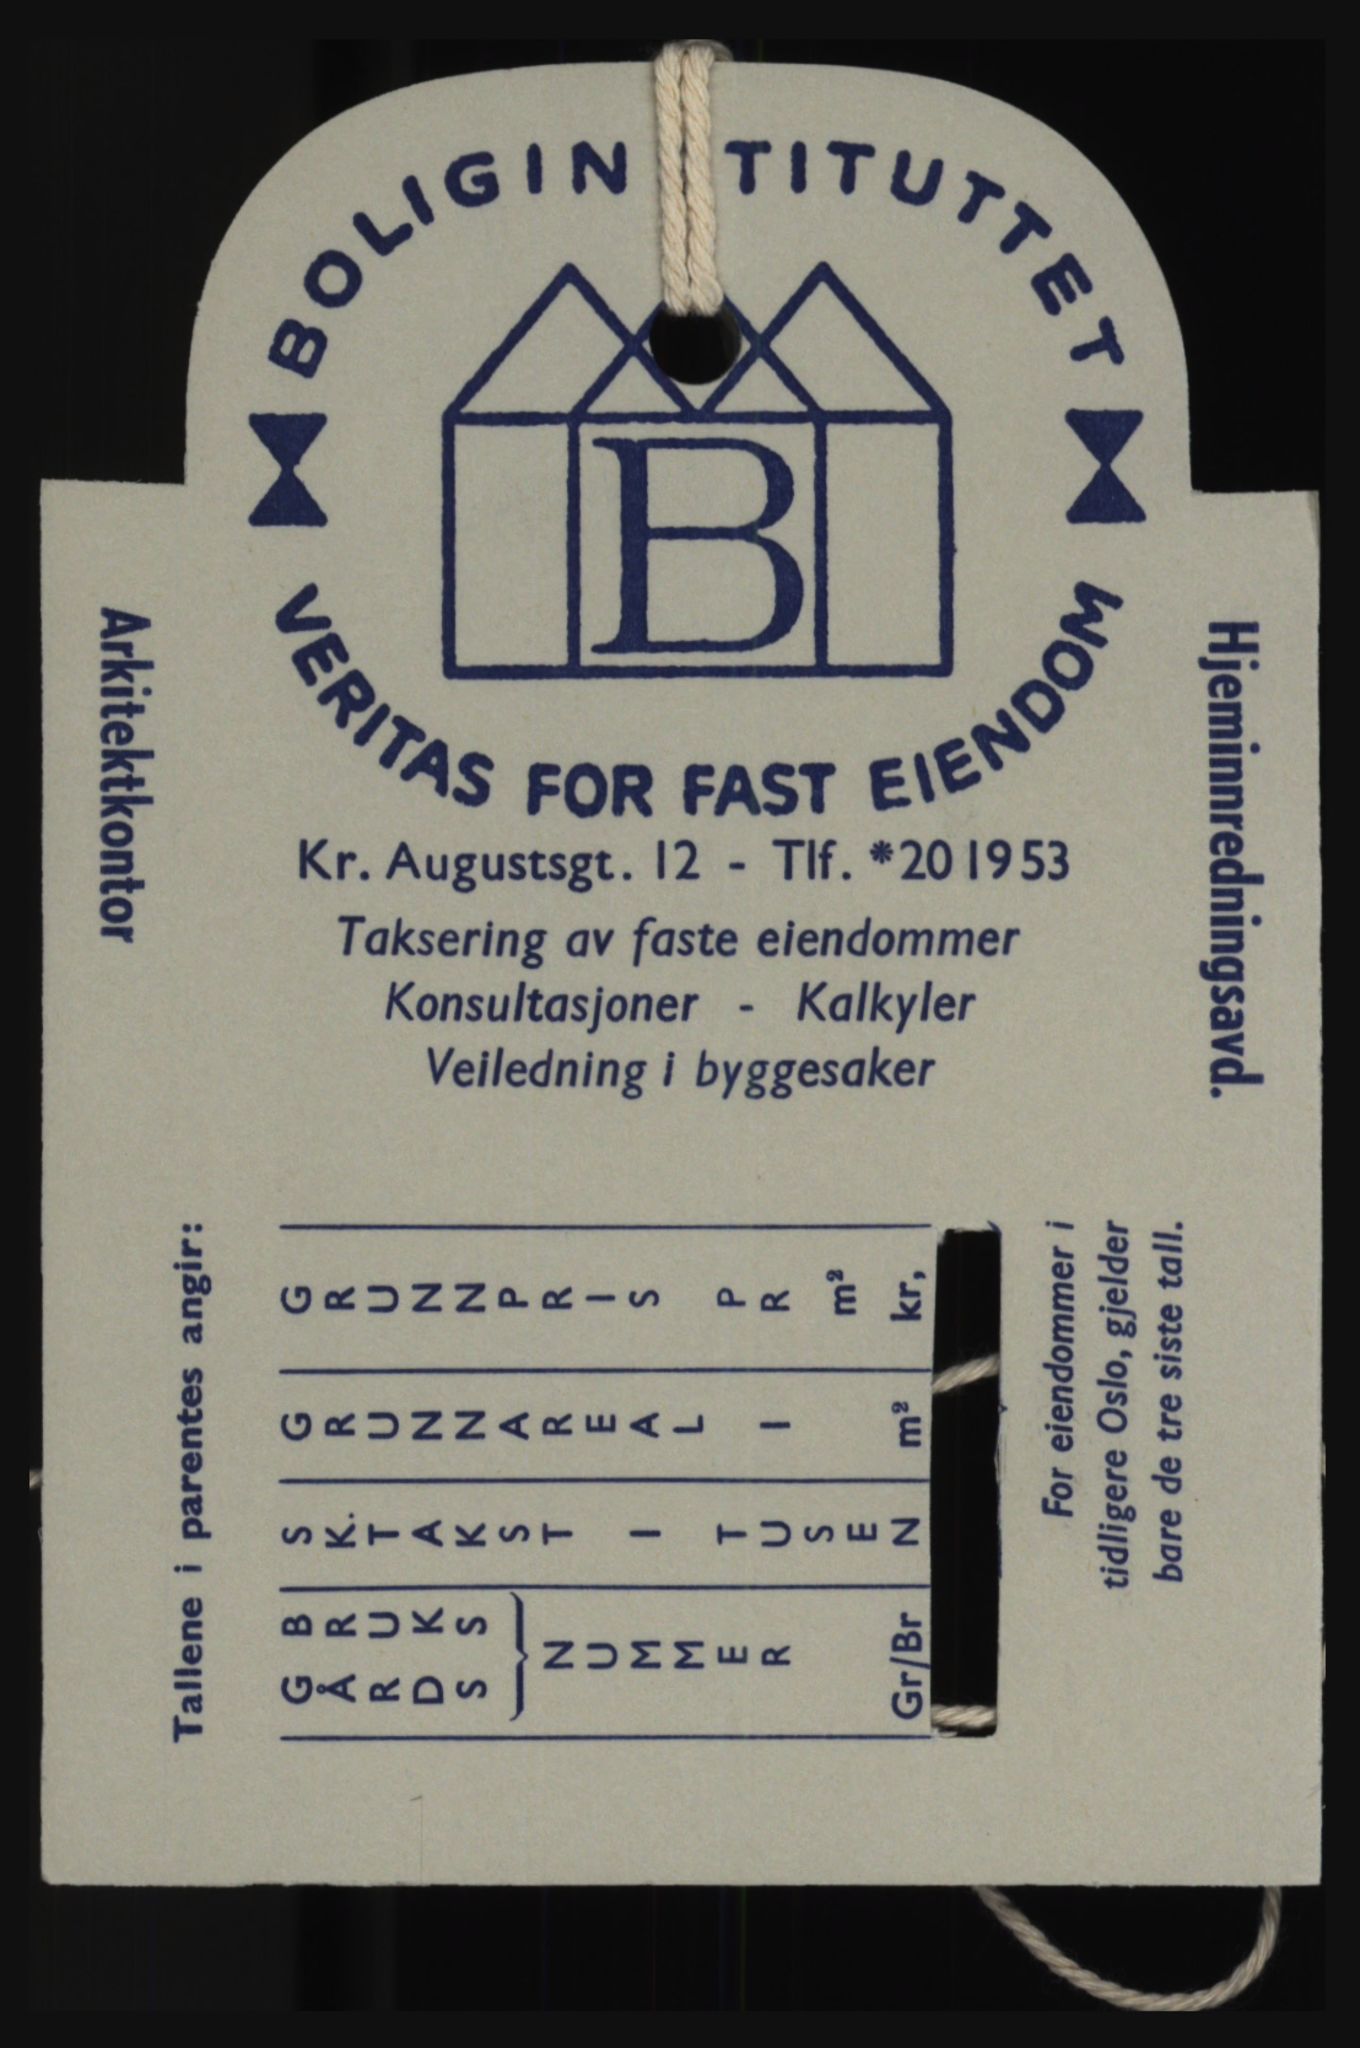 Kristiania/Oslo adressebok, PUBL/-, 1976-1977